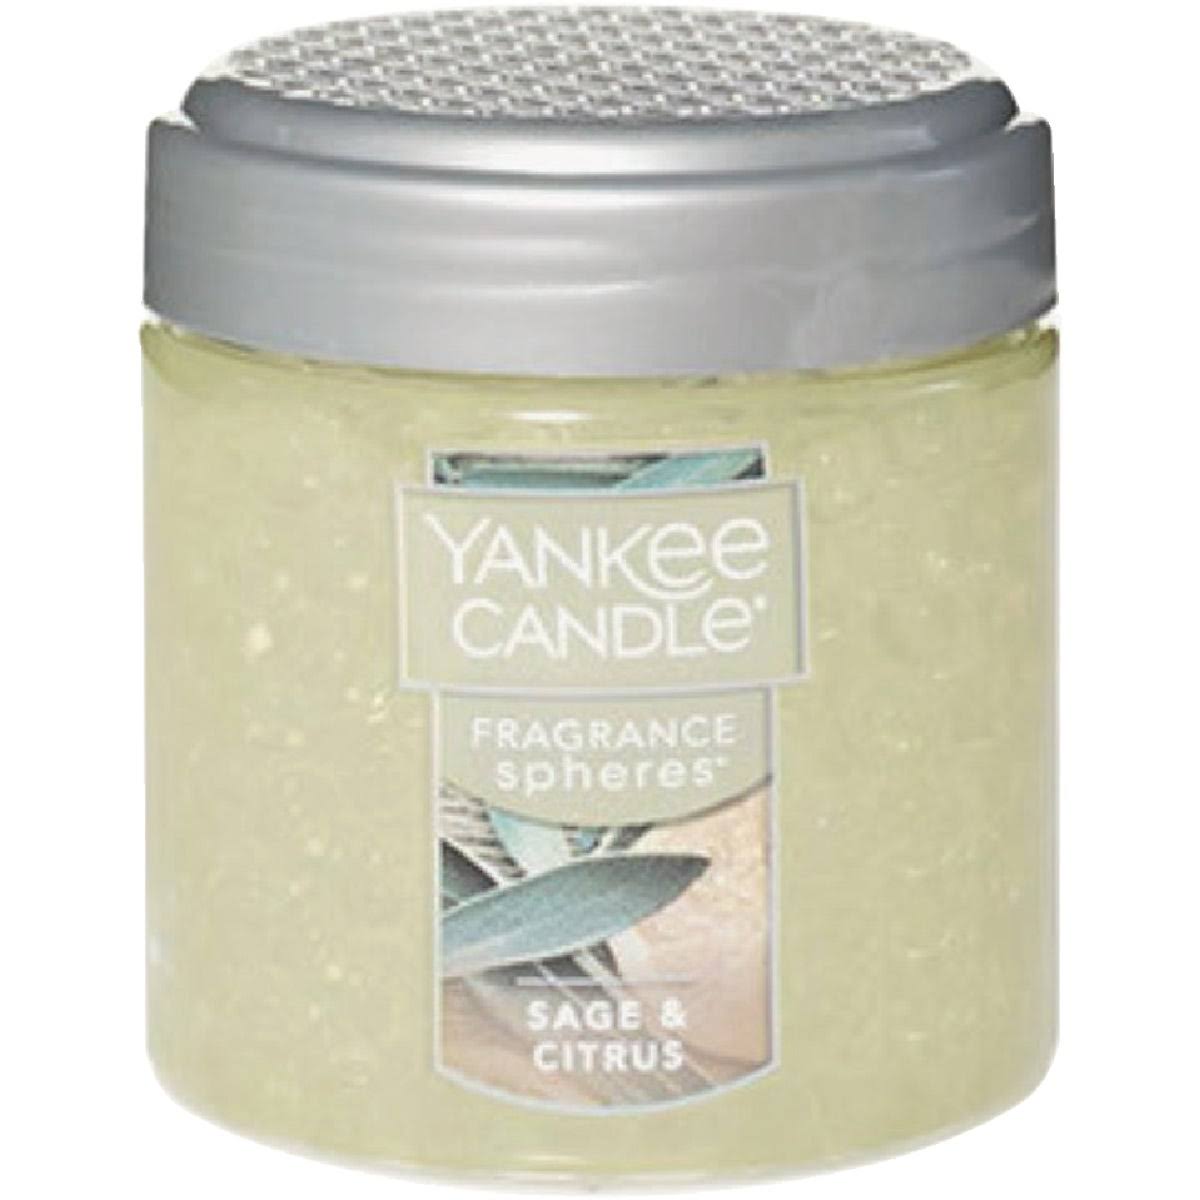 Yankee Candle Fragrance Spheres, Sage & Citrus